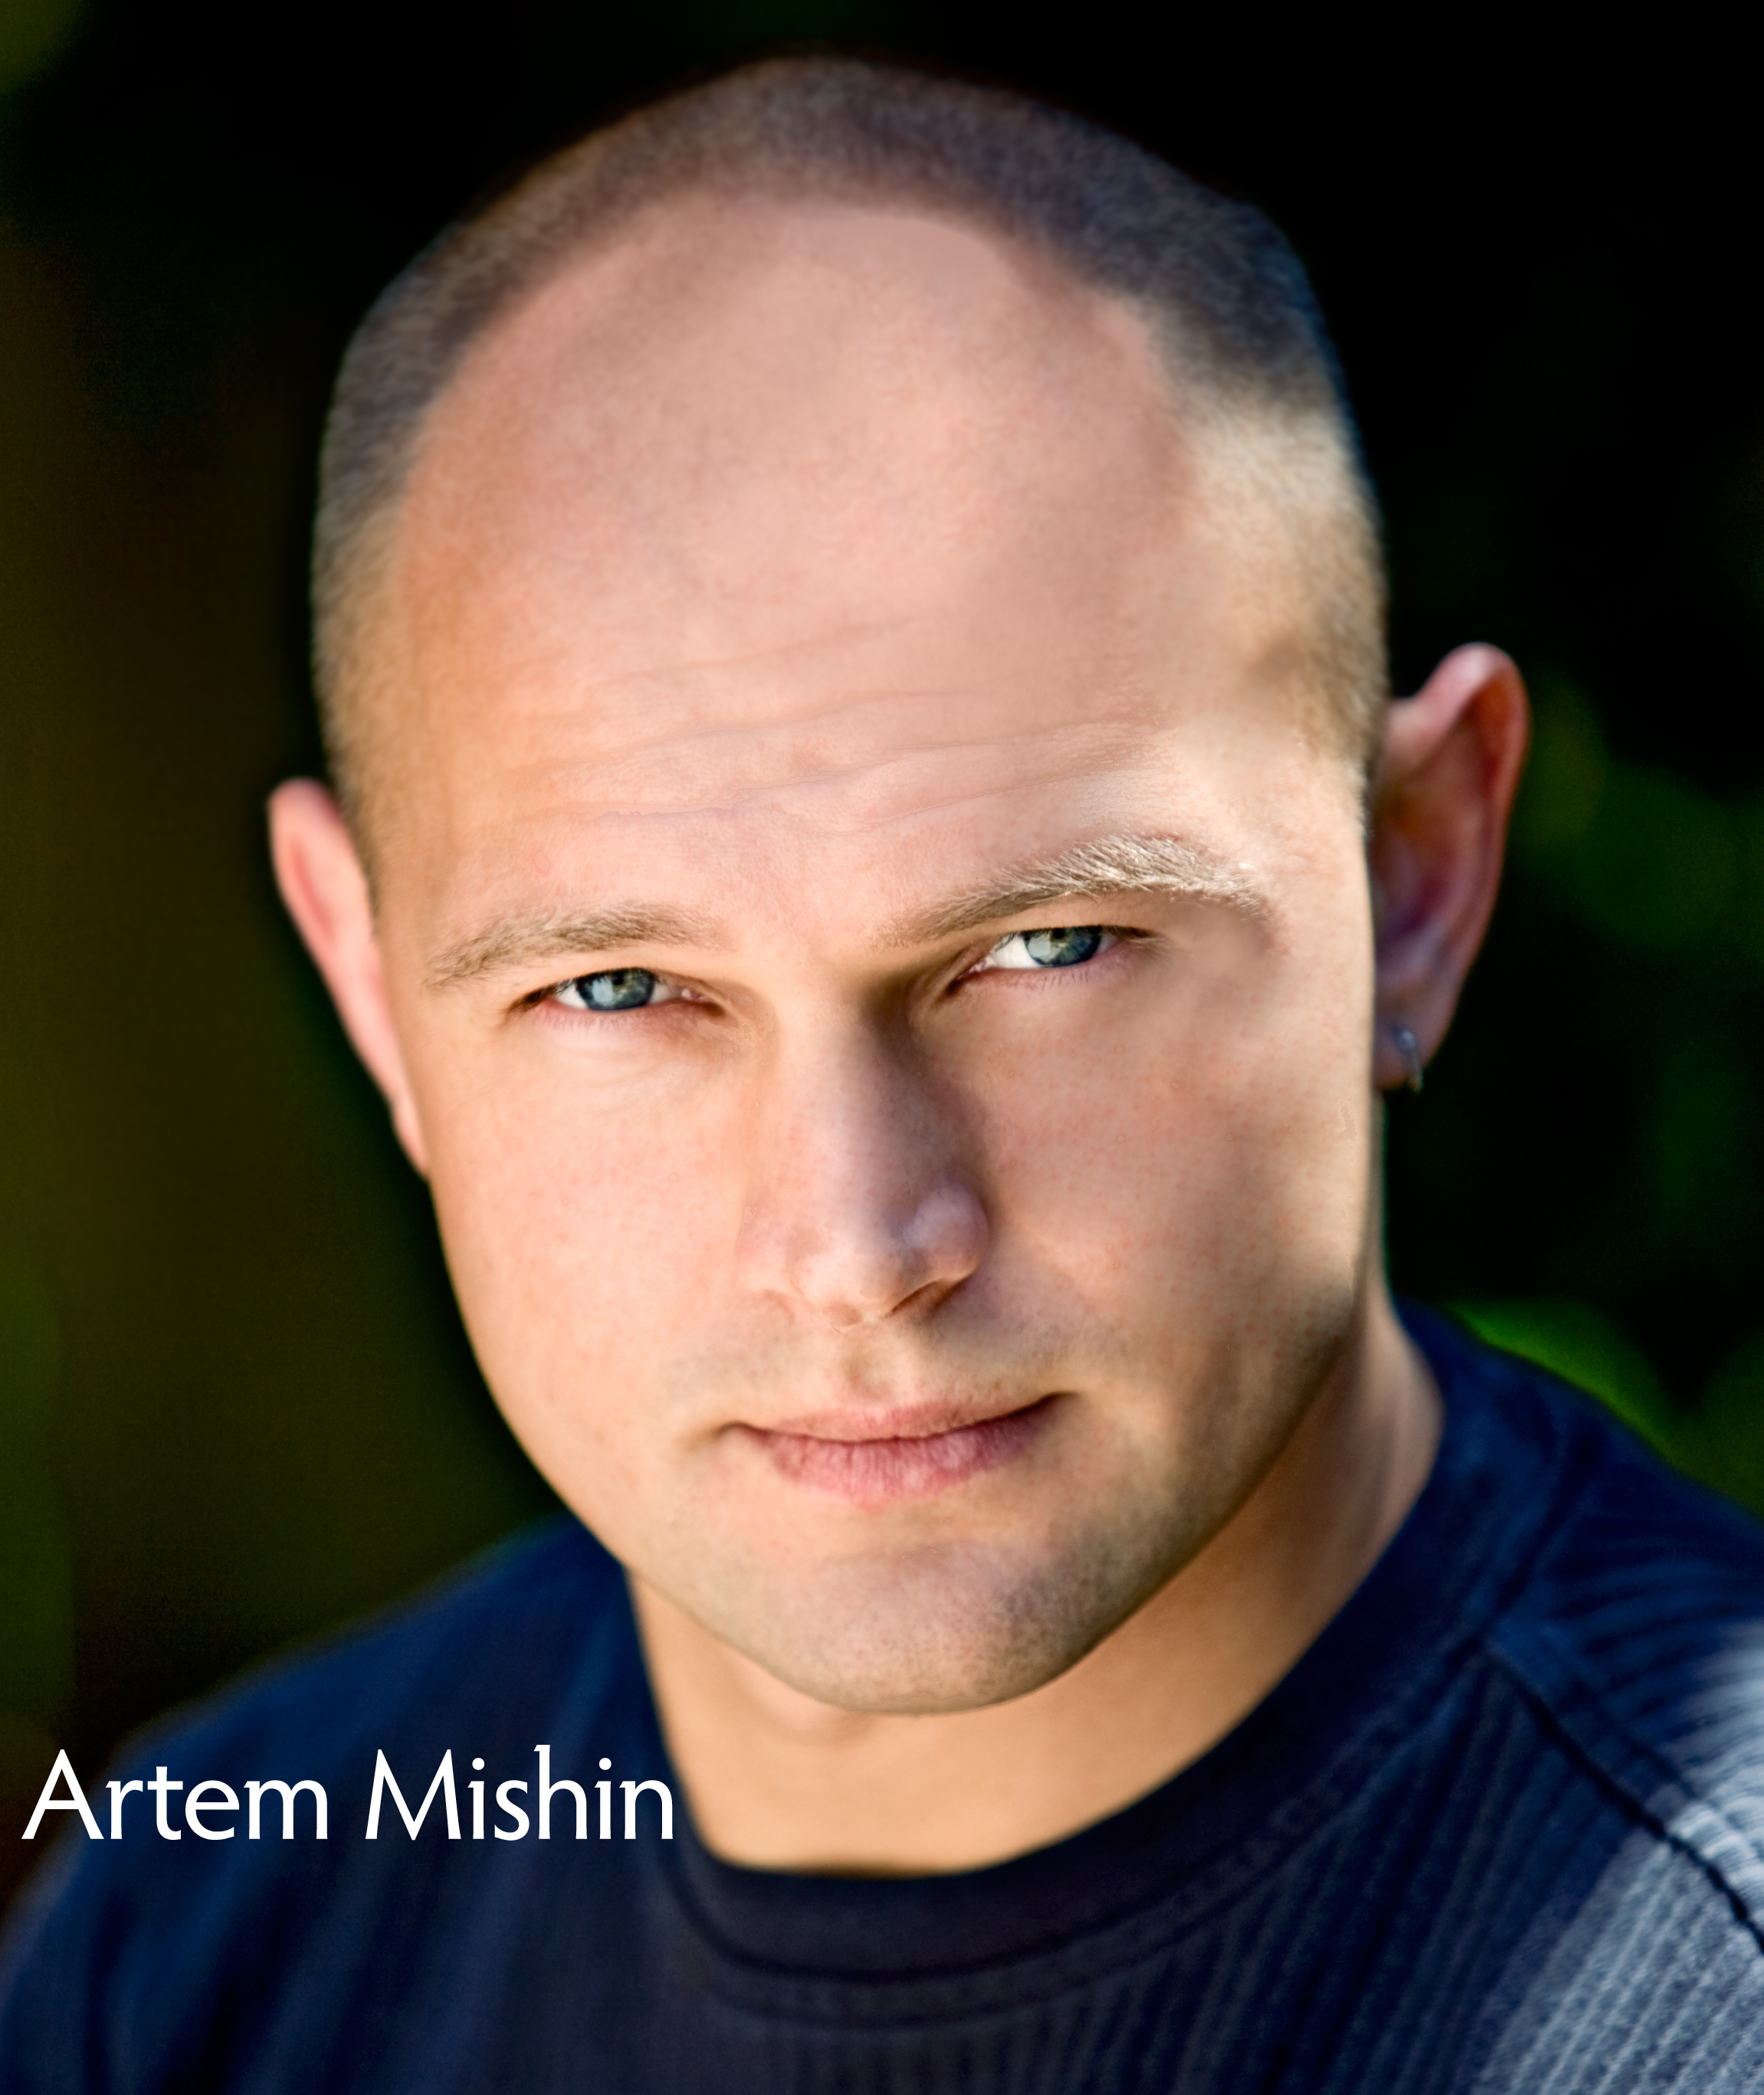 Artem Mishin